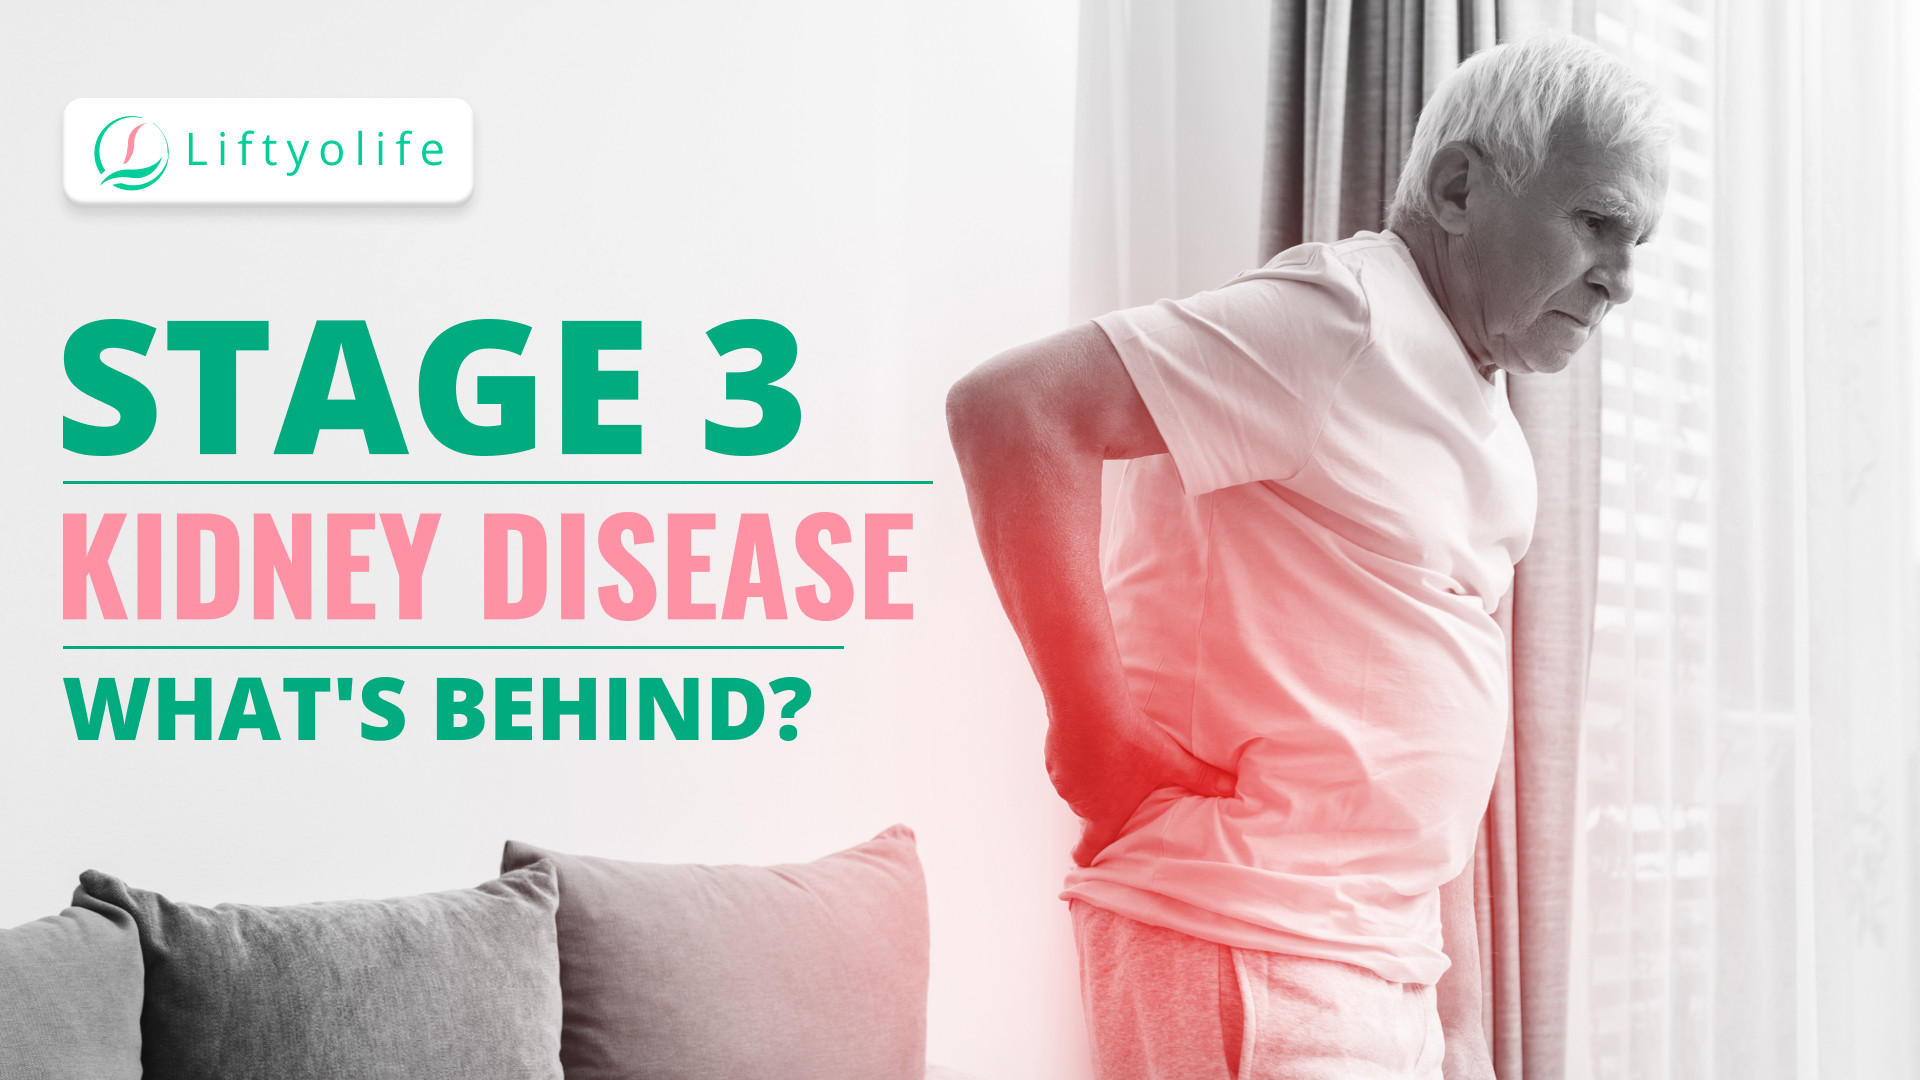 Stage 3 Kidney Disease: Symptoms & Treatment